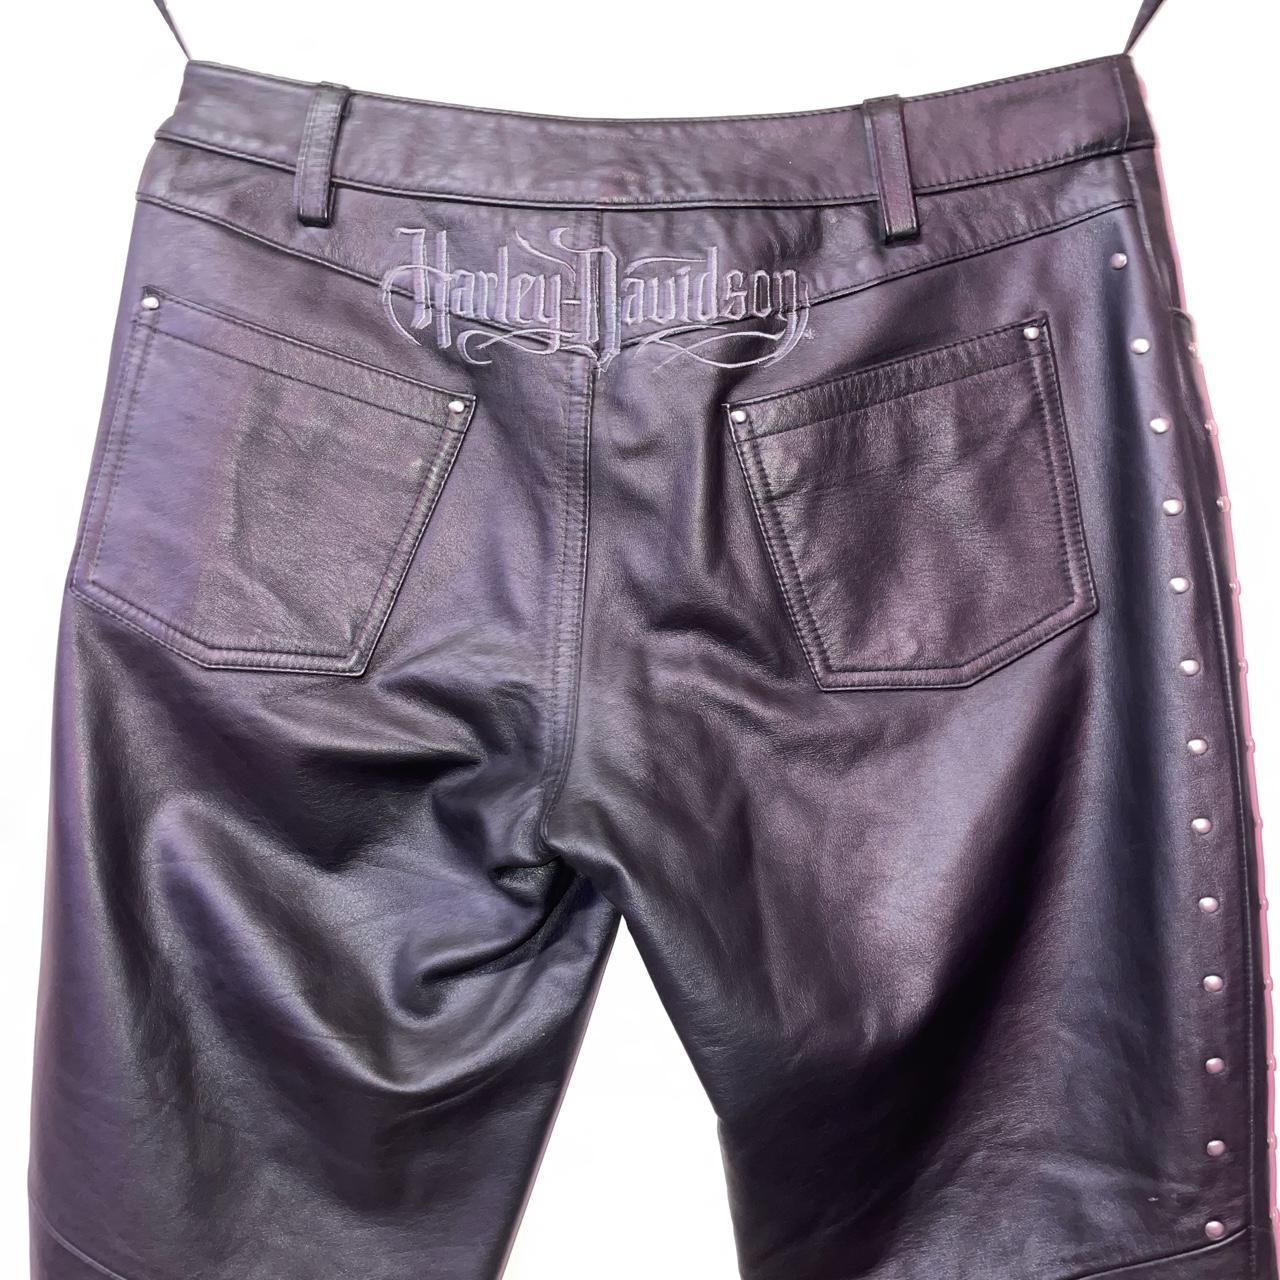 Harley Davidson womens leather pants with side leg - Depop